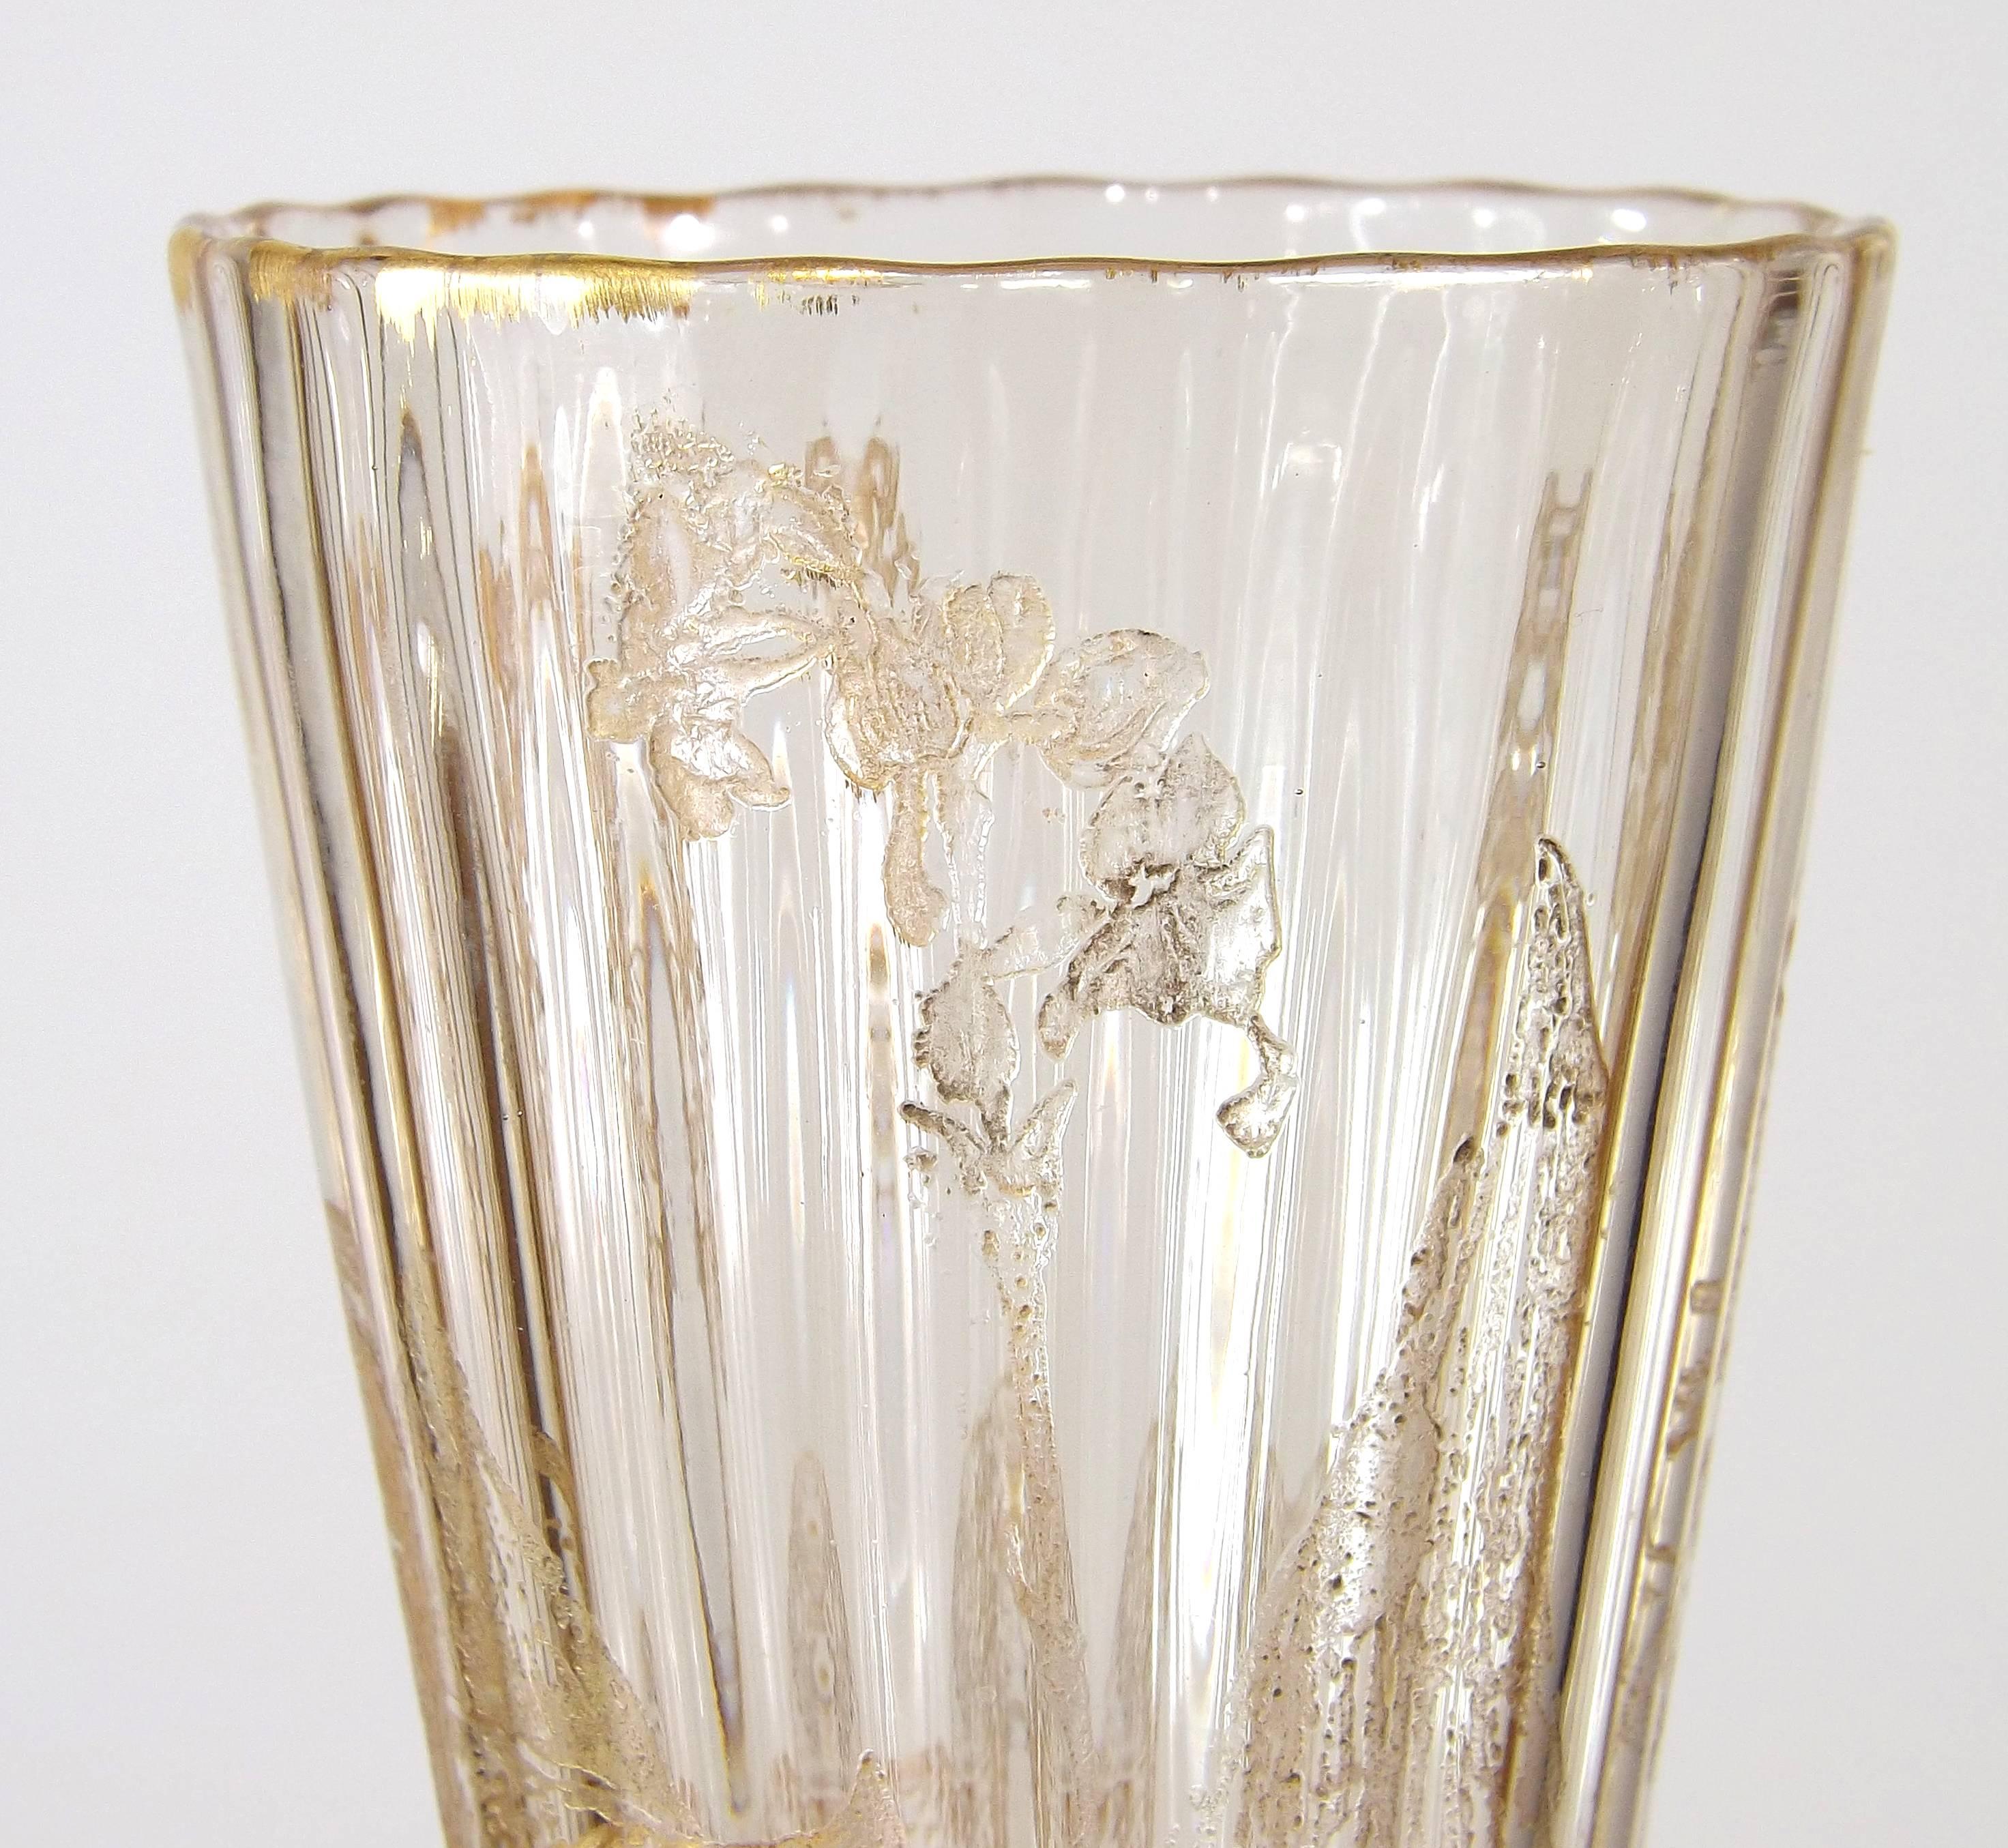 Art Nouveau Intaglio Gilt Decorated Emile Gallé Cabinet Vase, circa 1880 For Sale